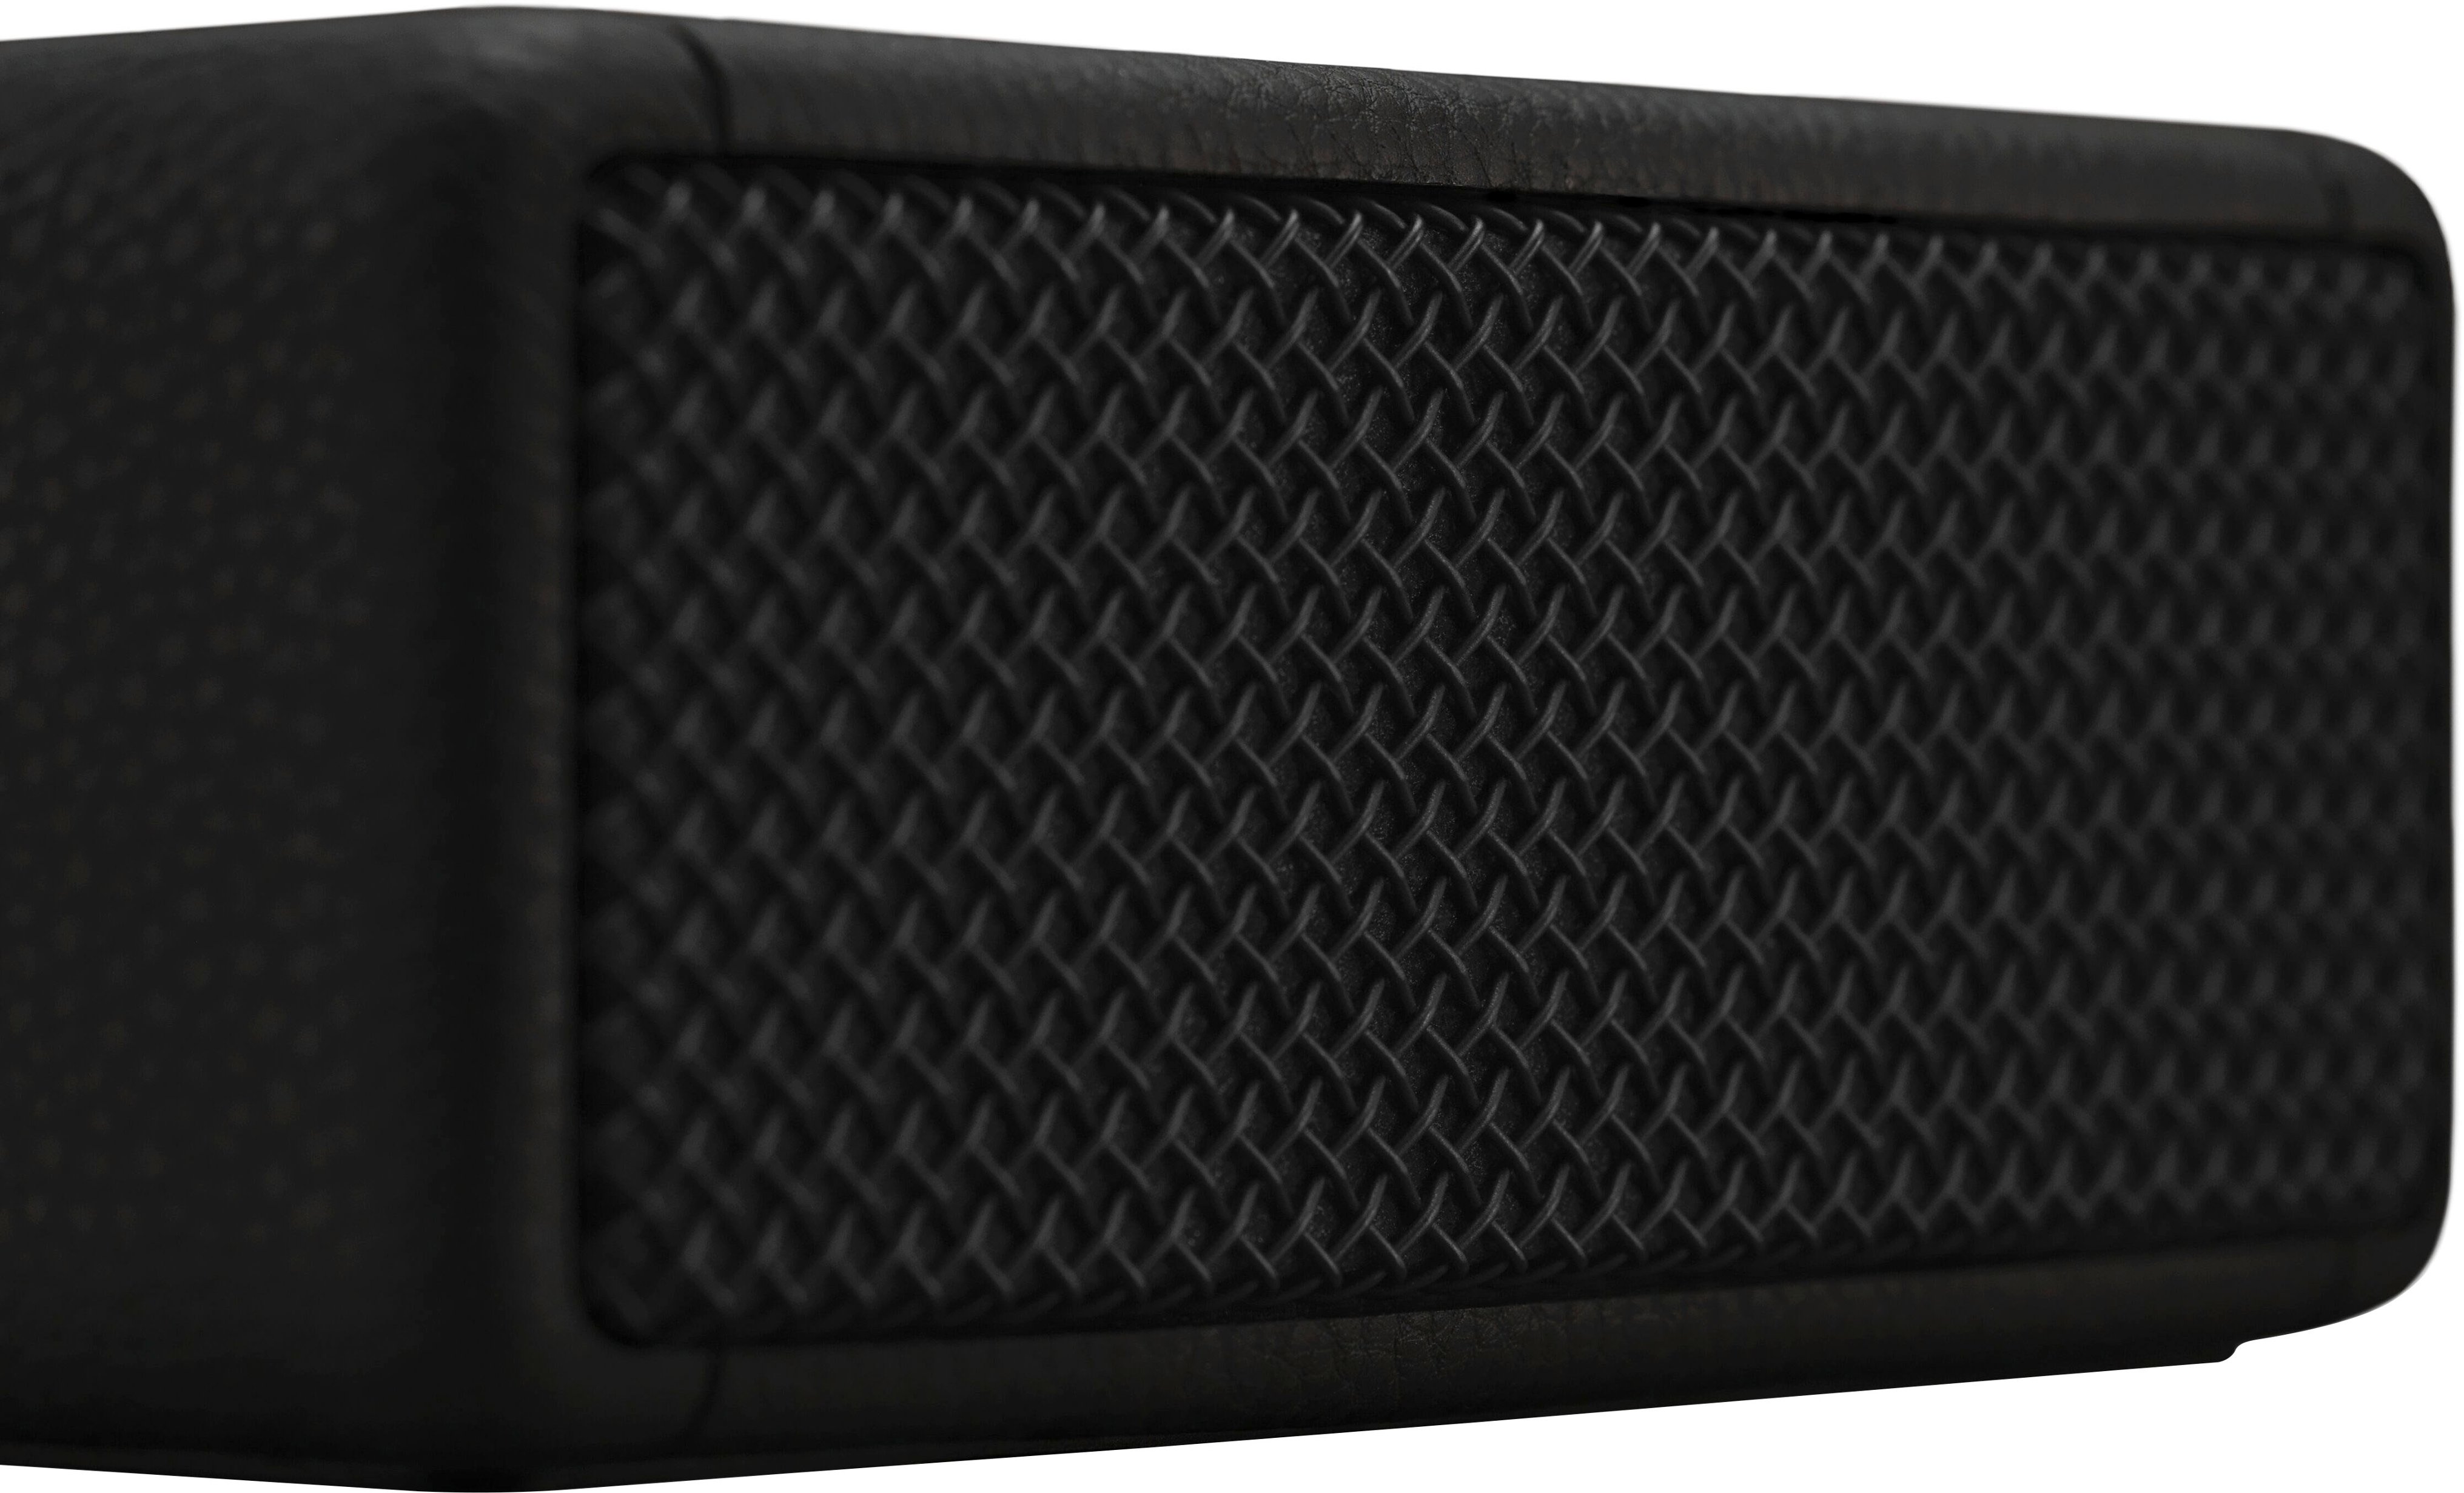 Marshall Emberton Portable Bluetooth Speaker - Black & Brass (1005696) for  sale online